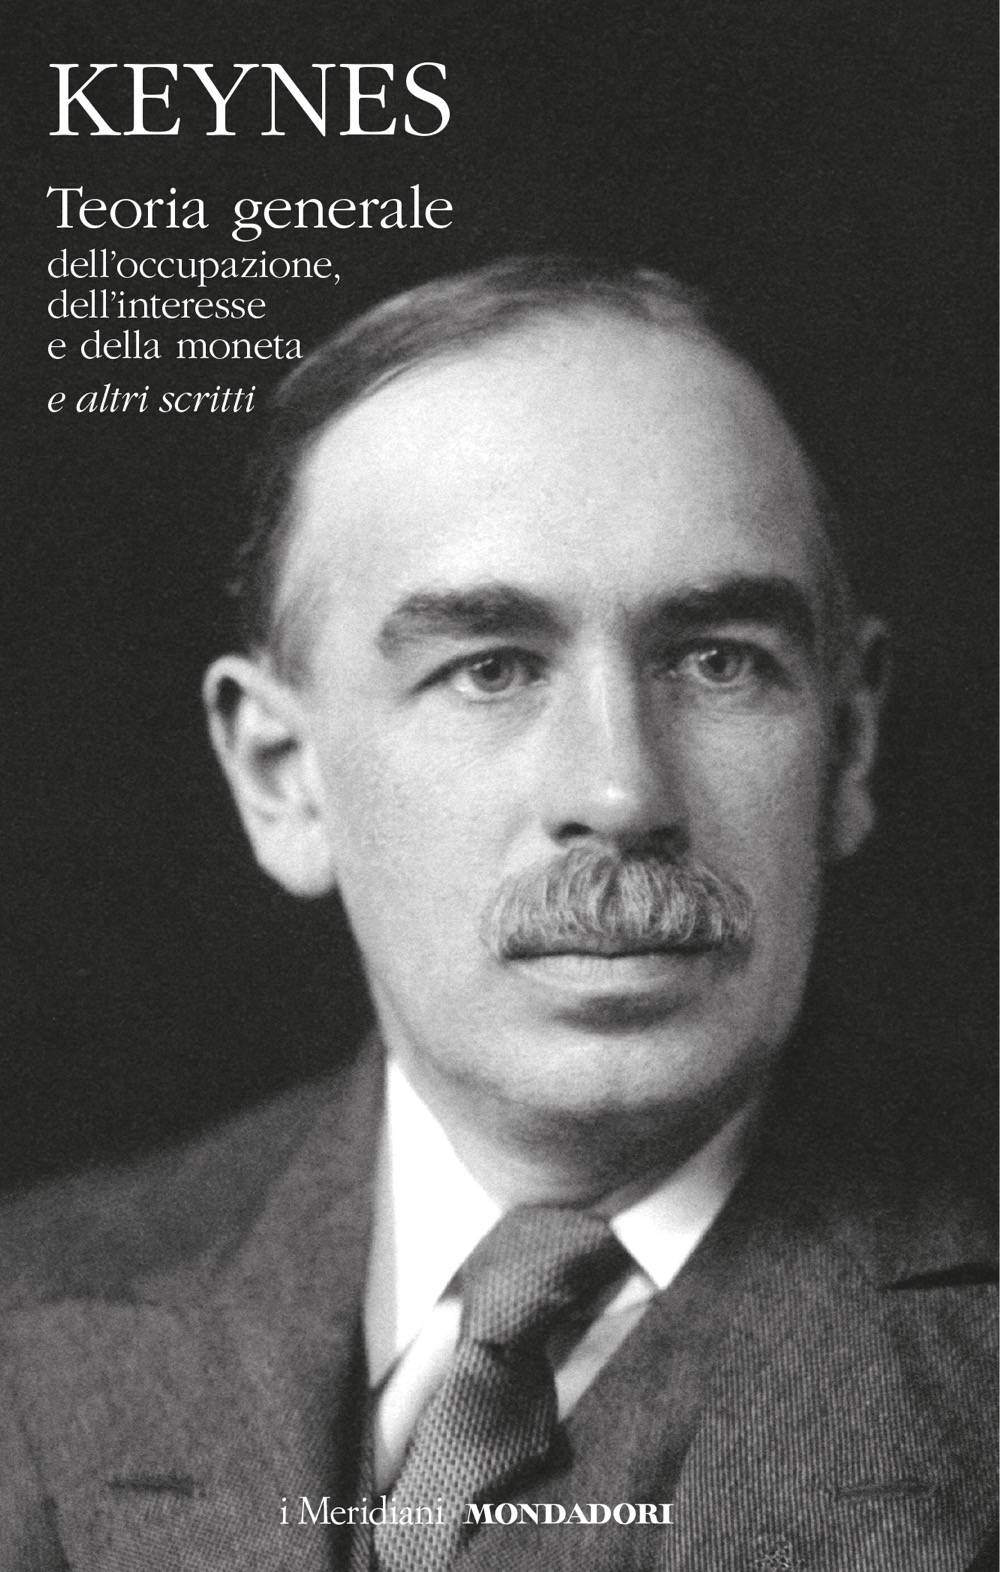 Keynes,  così snob così "classico" così (in)influente